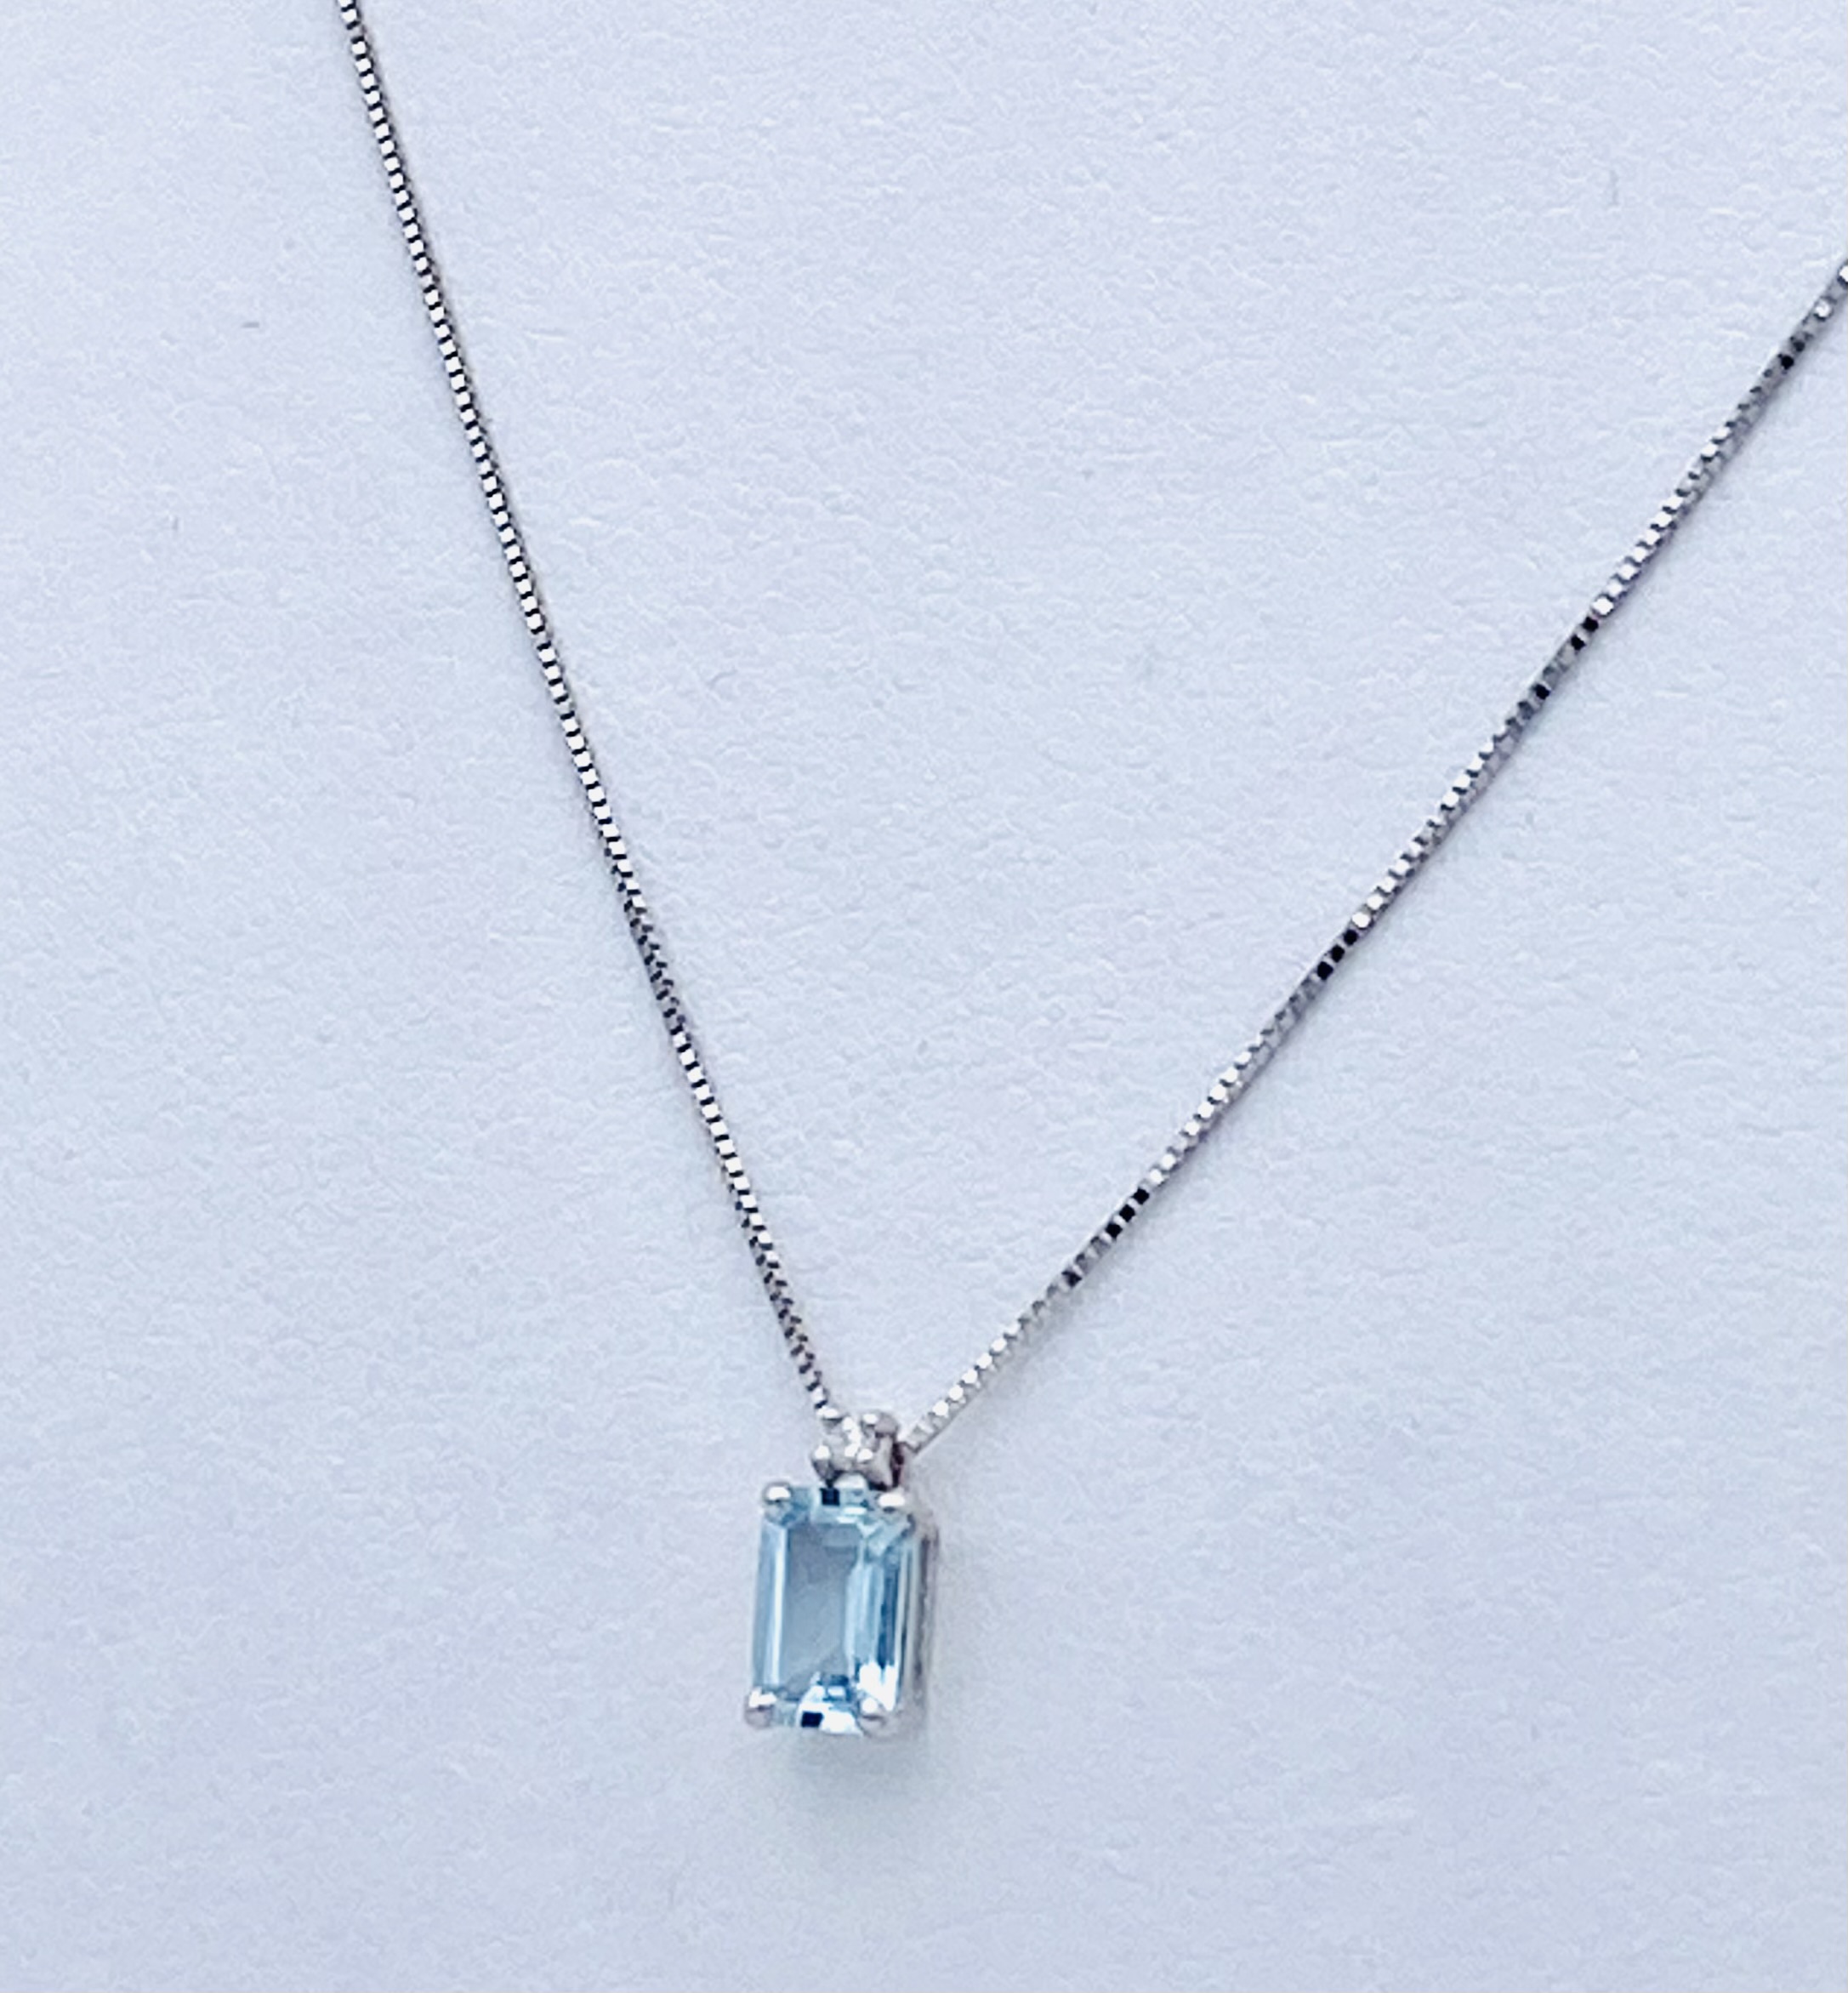 Aquamarine pendant diamonds white gold 750 % Art. PDC4323